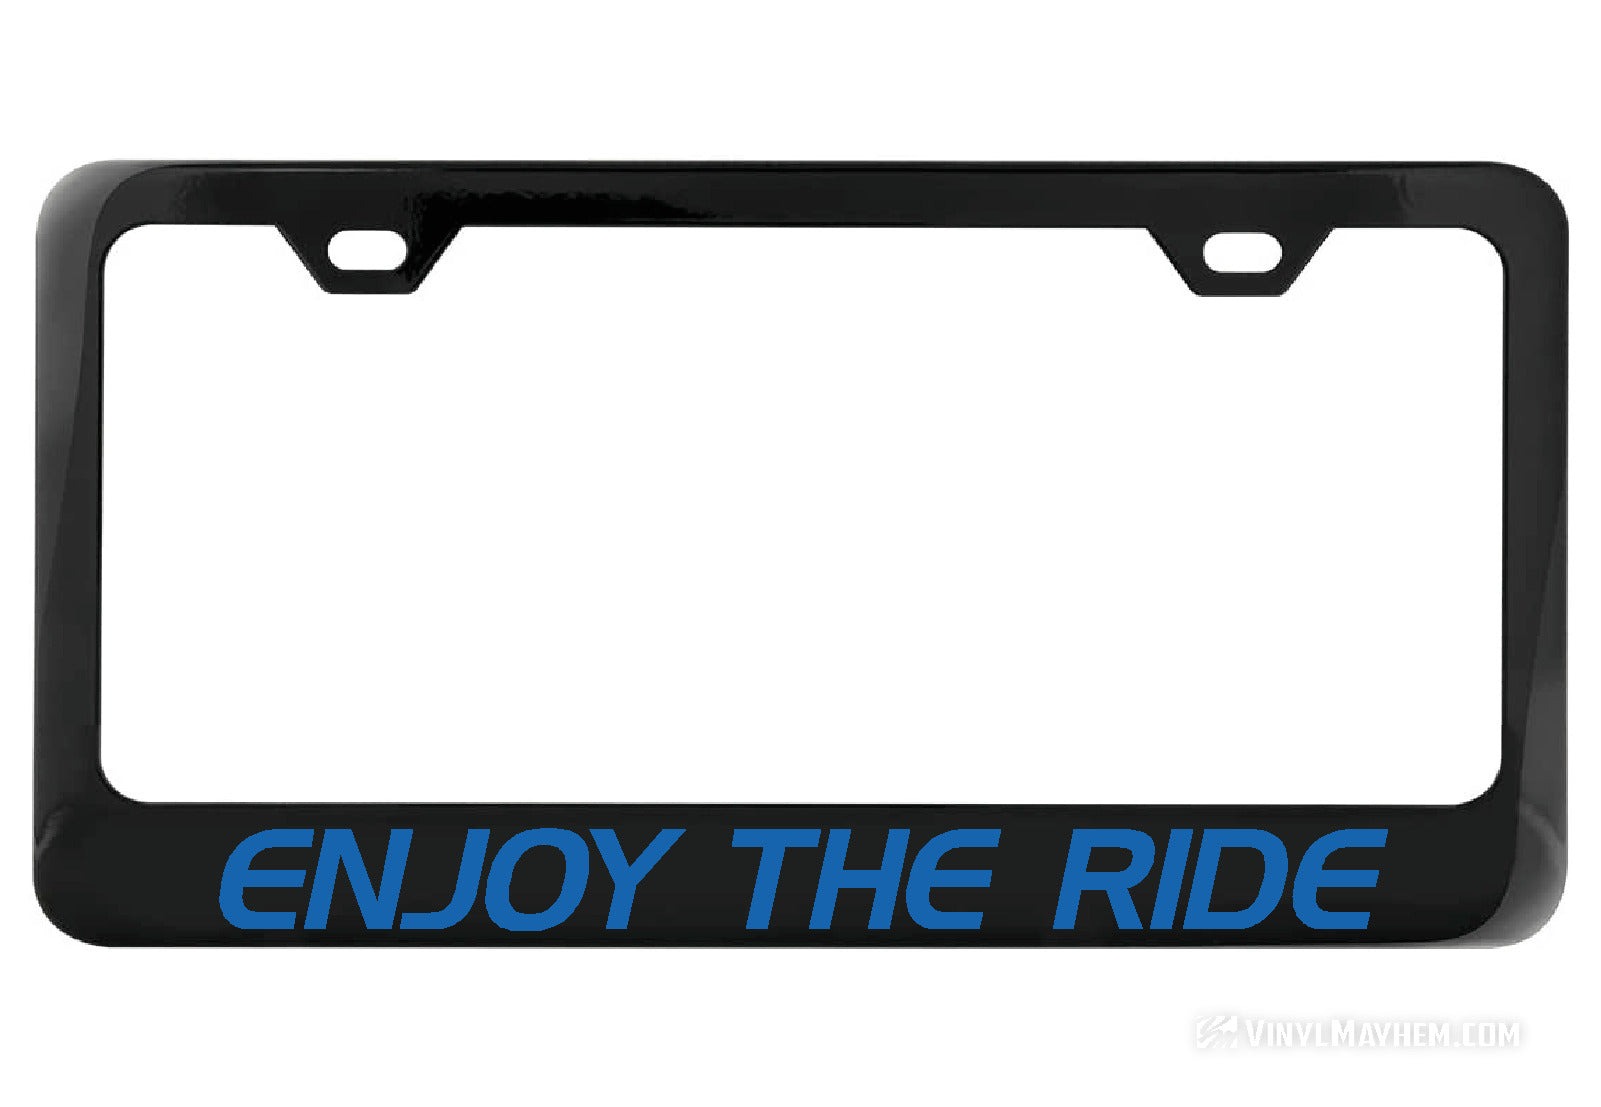 Enjoy The Ride black license plate frame